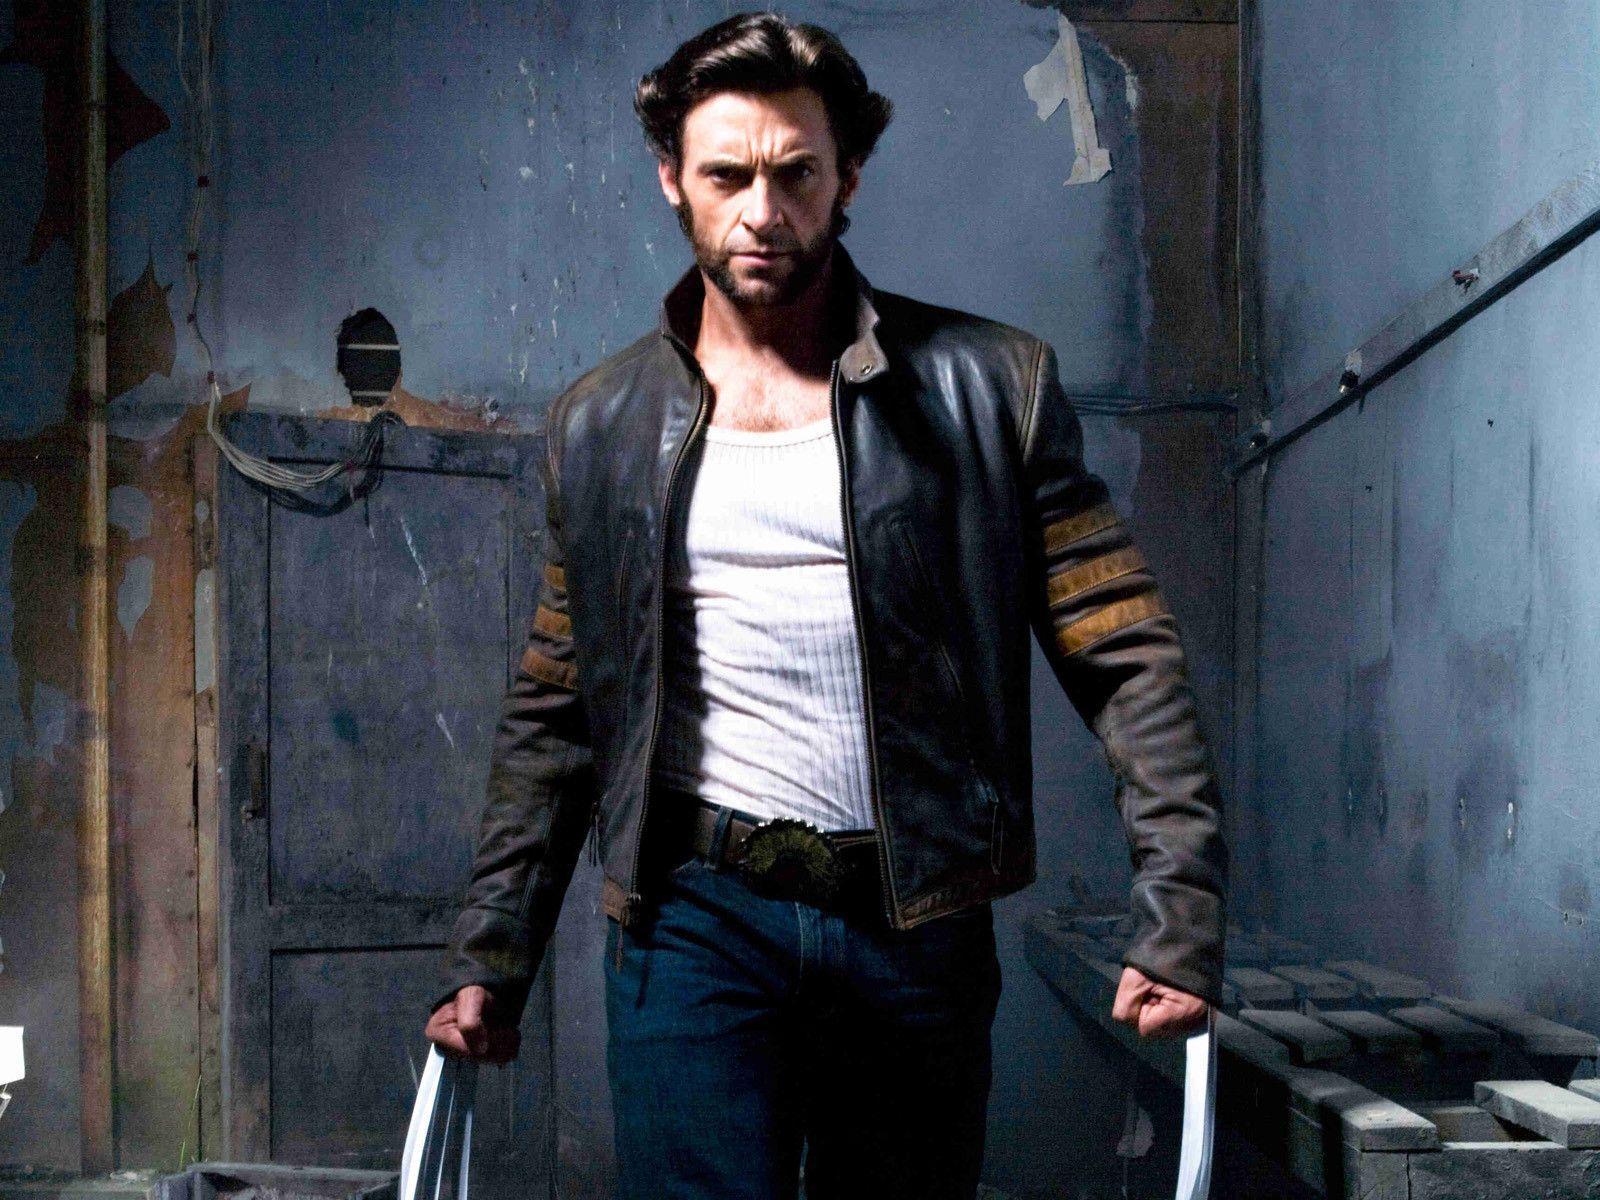 Wolverine Hugh Jackman Wallpaper 2015